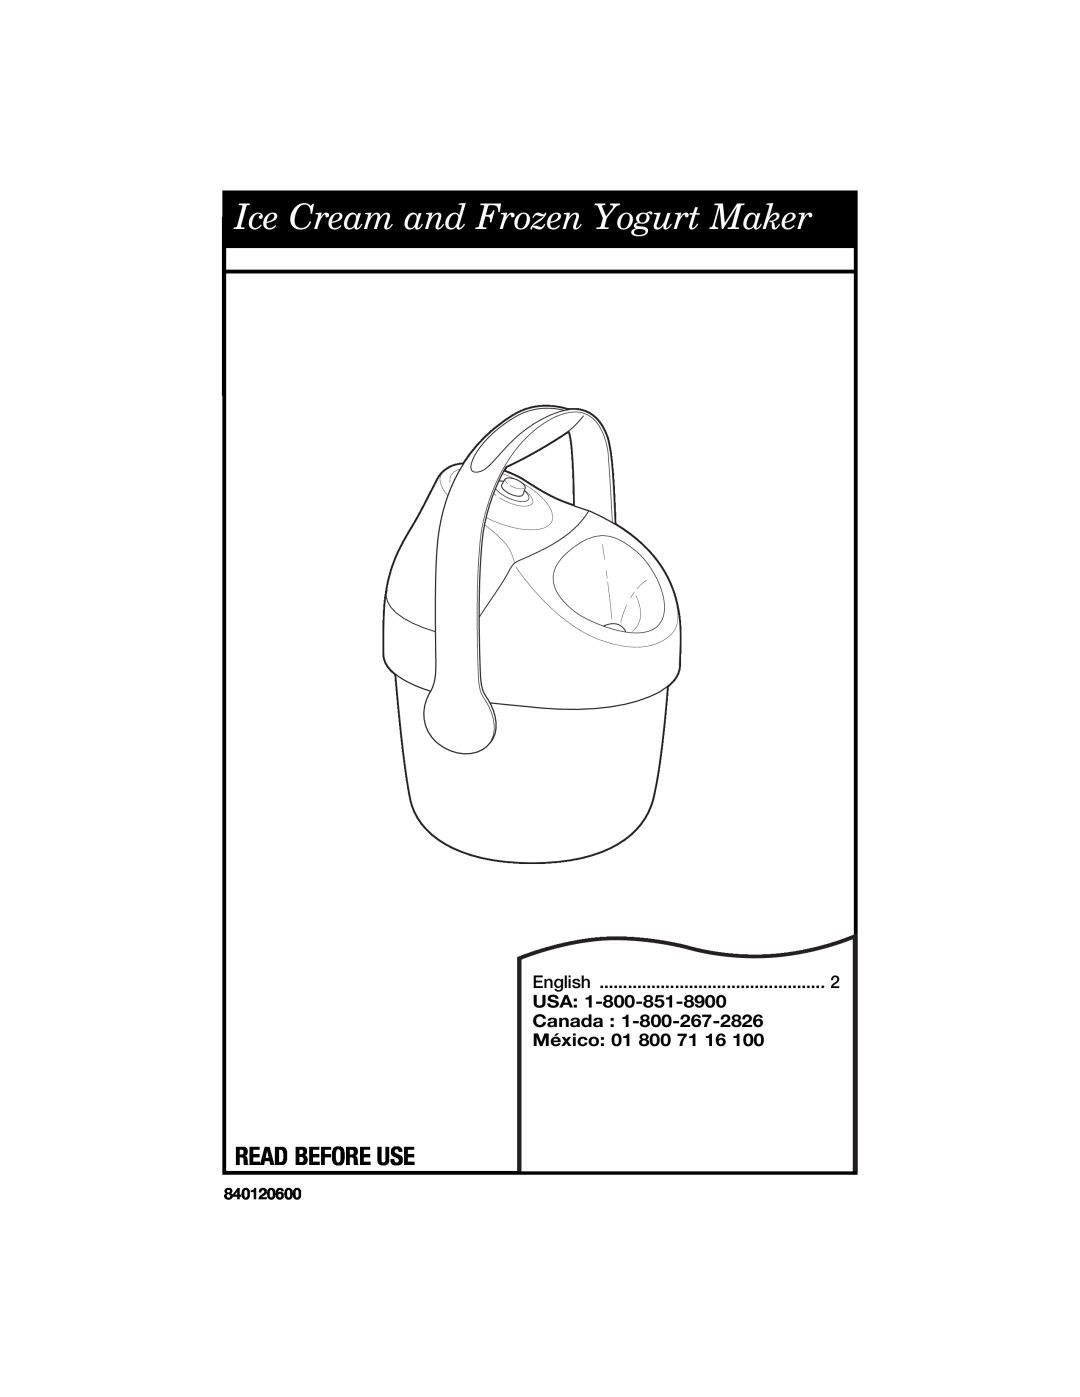 Hamilton Beach Ice Cream and Frozen Yogurt Maker manual Read Before Use, Canada, México 01 800 71, English, 840120600 